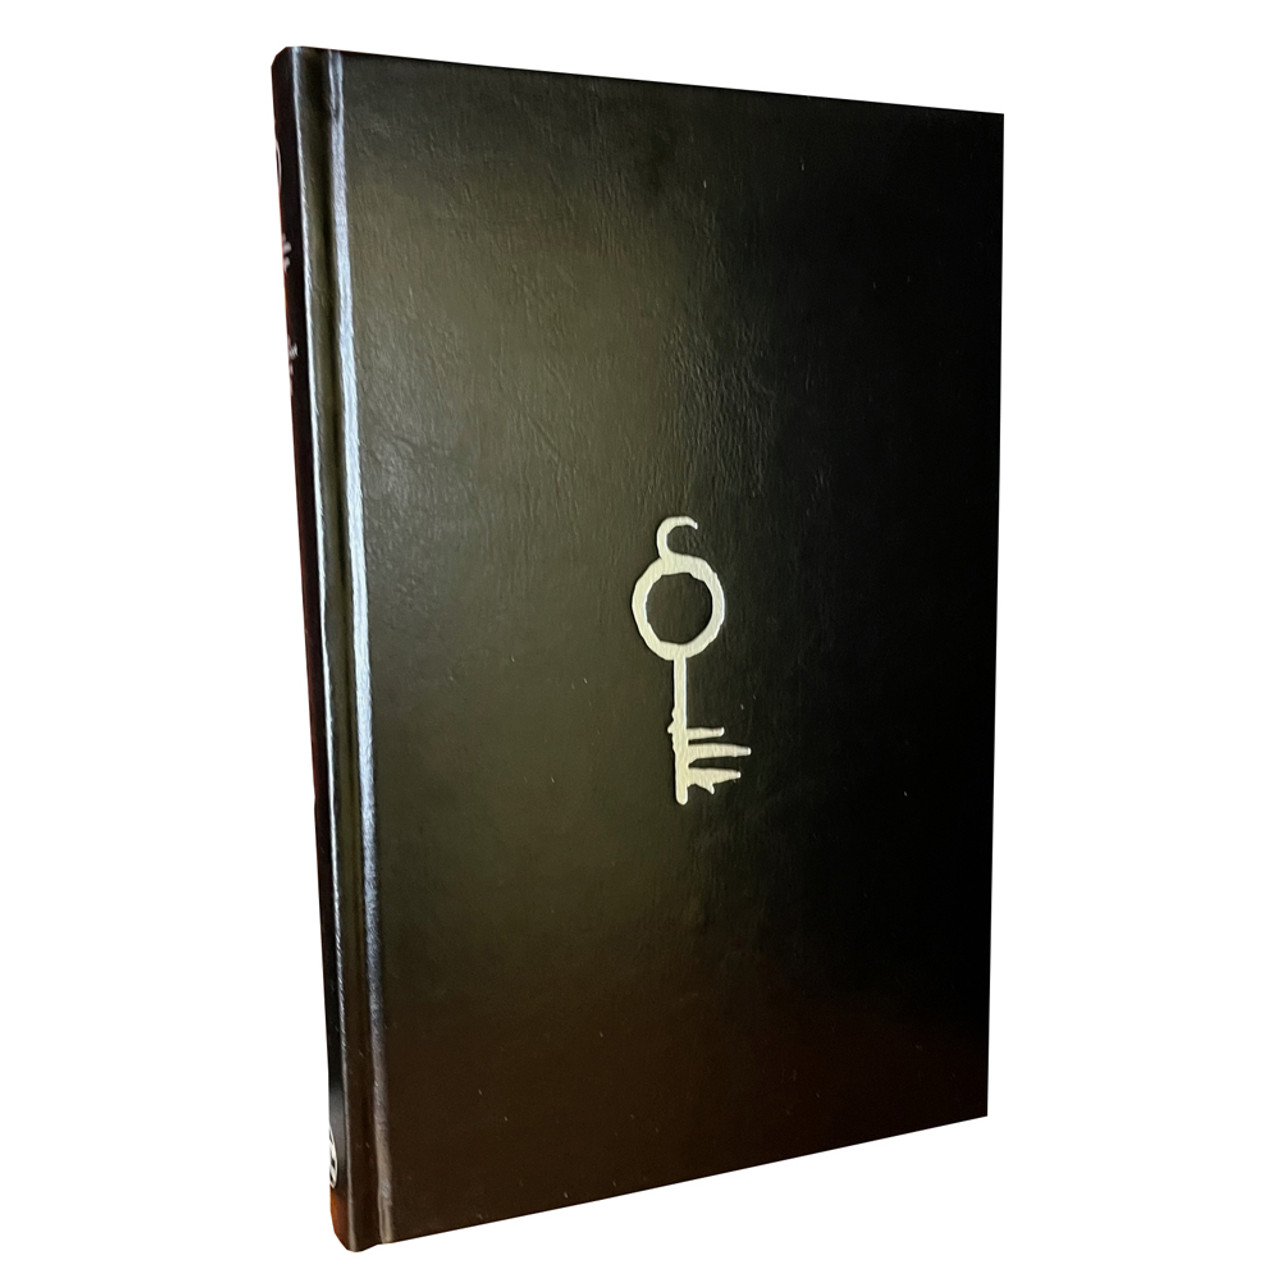 Neil Gaiman "The Sandman: Morpheus Helm Masterpiece Edition" 6-Volume Signed Limited Edition, Leather-Bound w/COA [Very Fine]